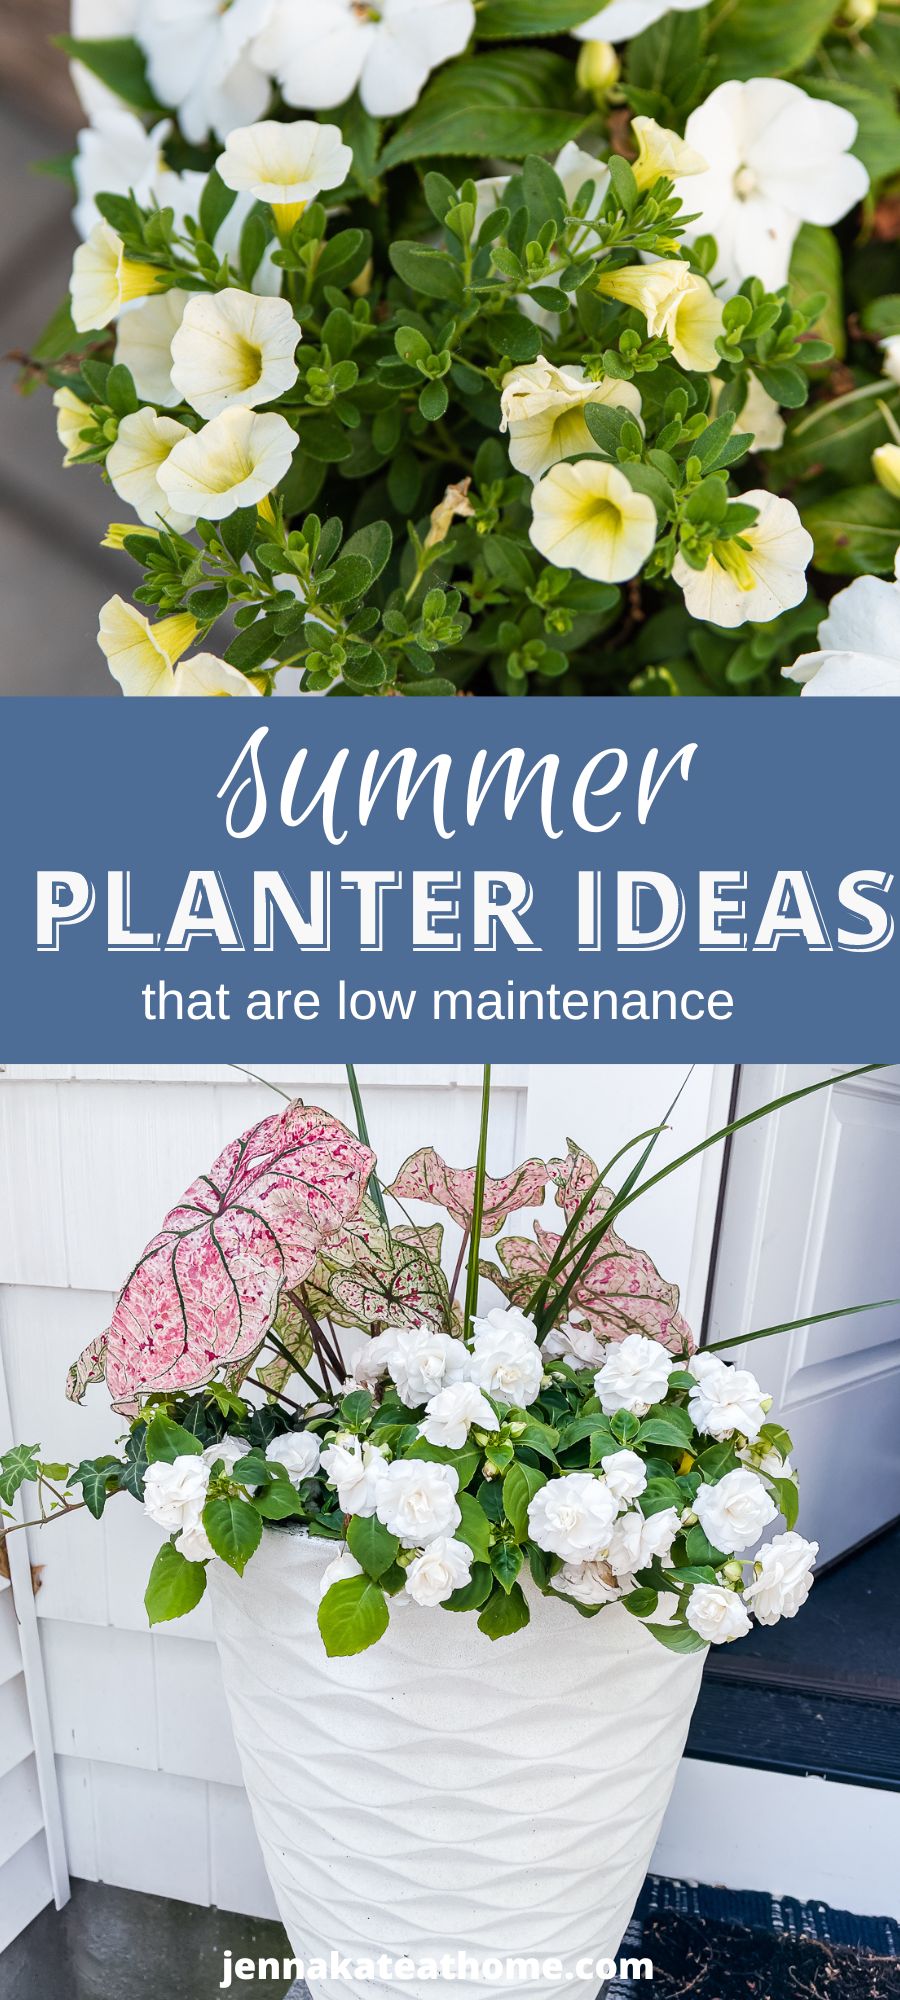 summer planter ideas pin